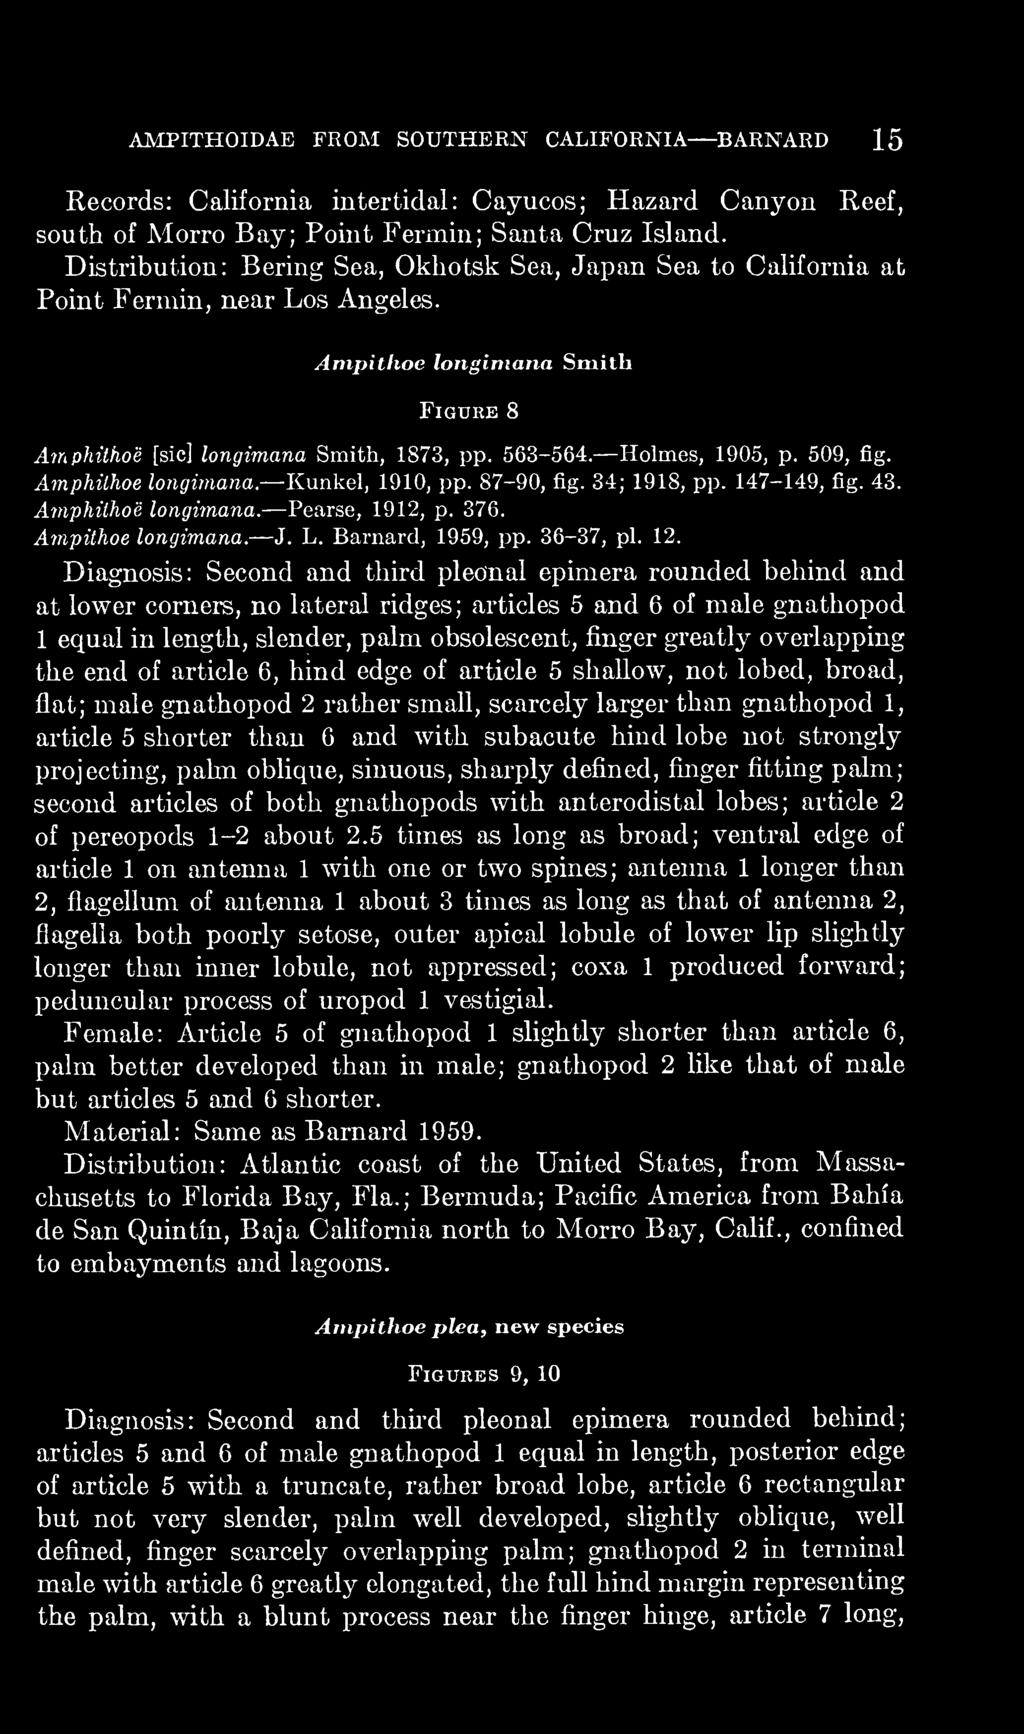 509, fig. Amphiihoe longimana. Kunkel, 1910, pp. 87-90, fig. 34; 1918, pp. 147-149, fig. 43. Amphithoe longimana. Pearse, 1912, p. 376. Ampithoe longimana. J. L. Barnard, 1959, pp. 36-37, pi. 12.